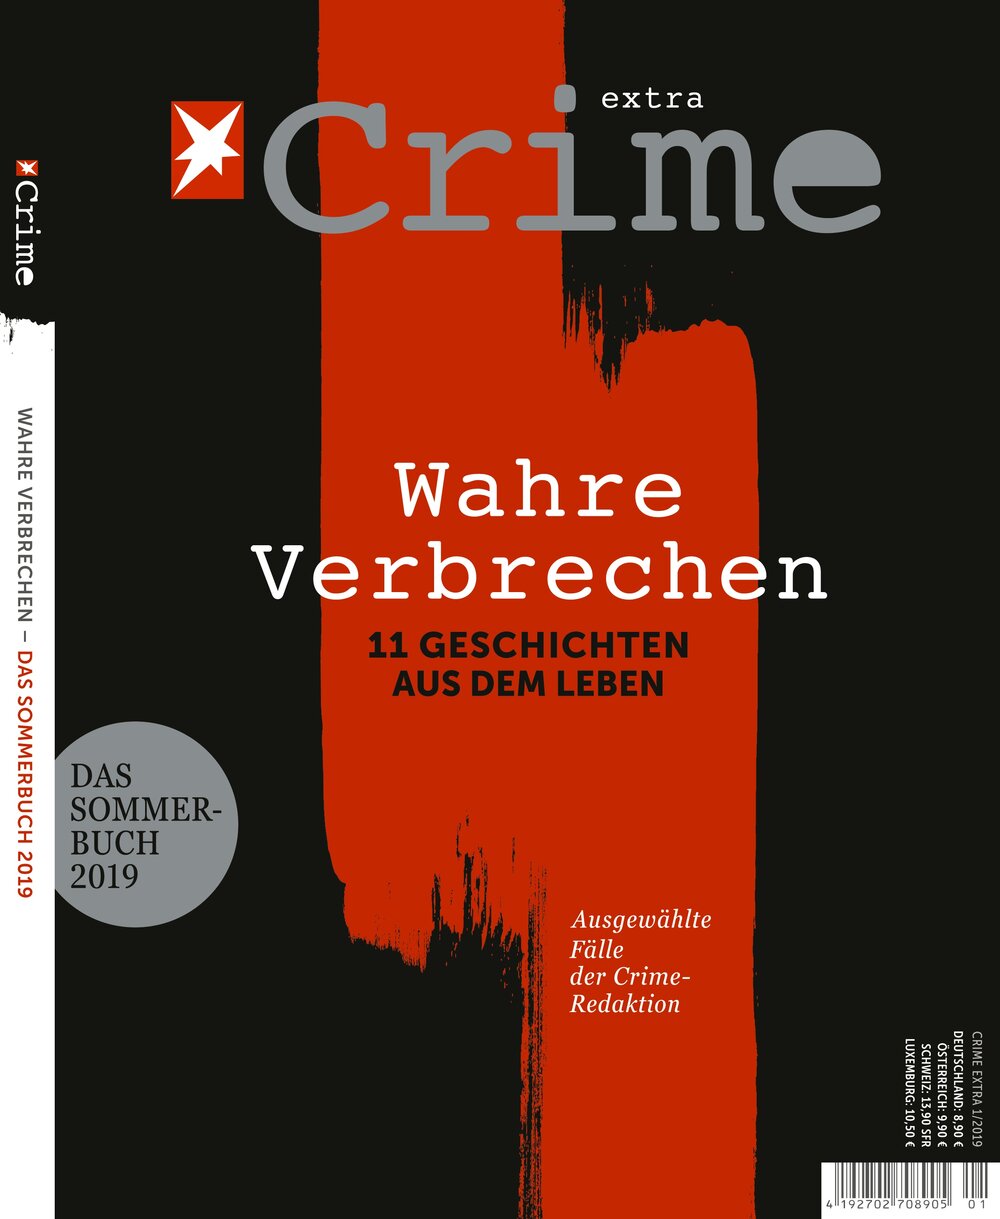 STERN CRIME Sonderheft 01/2019